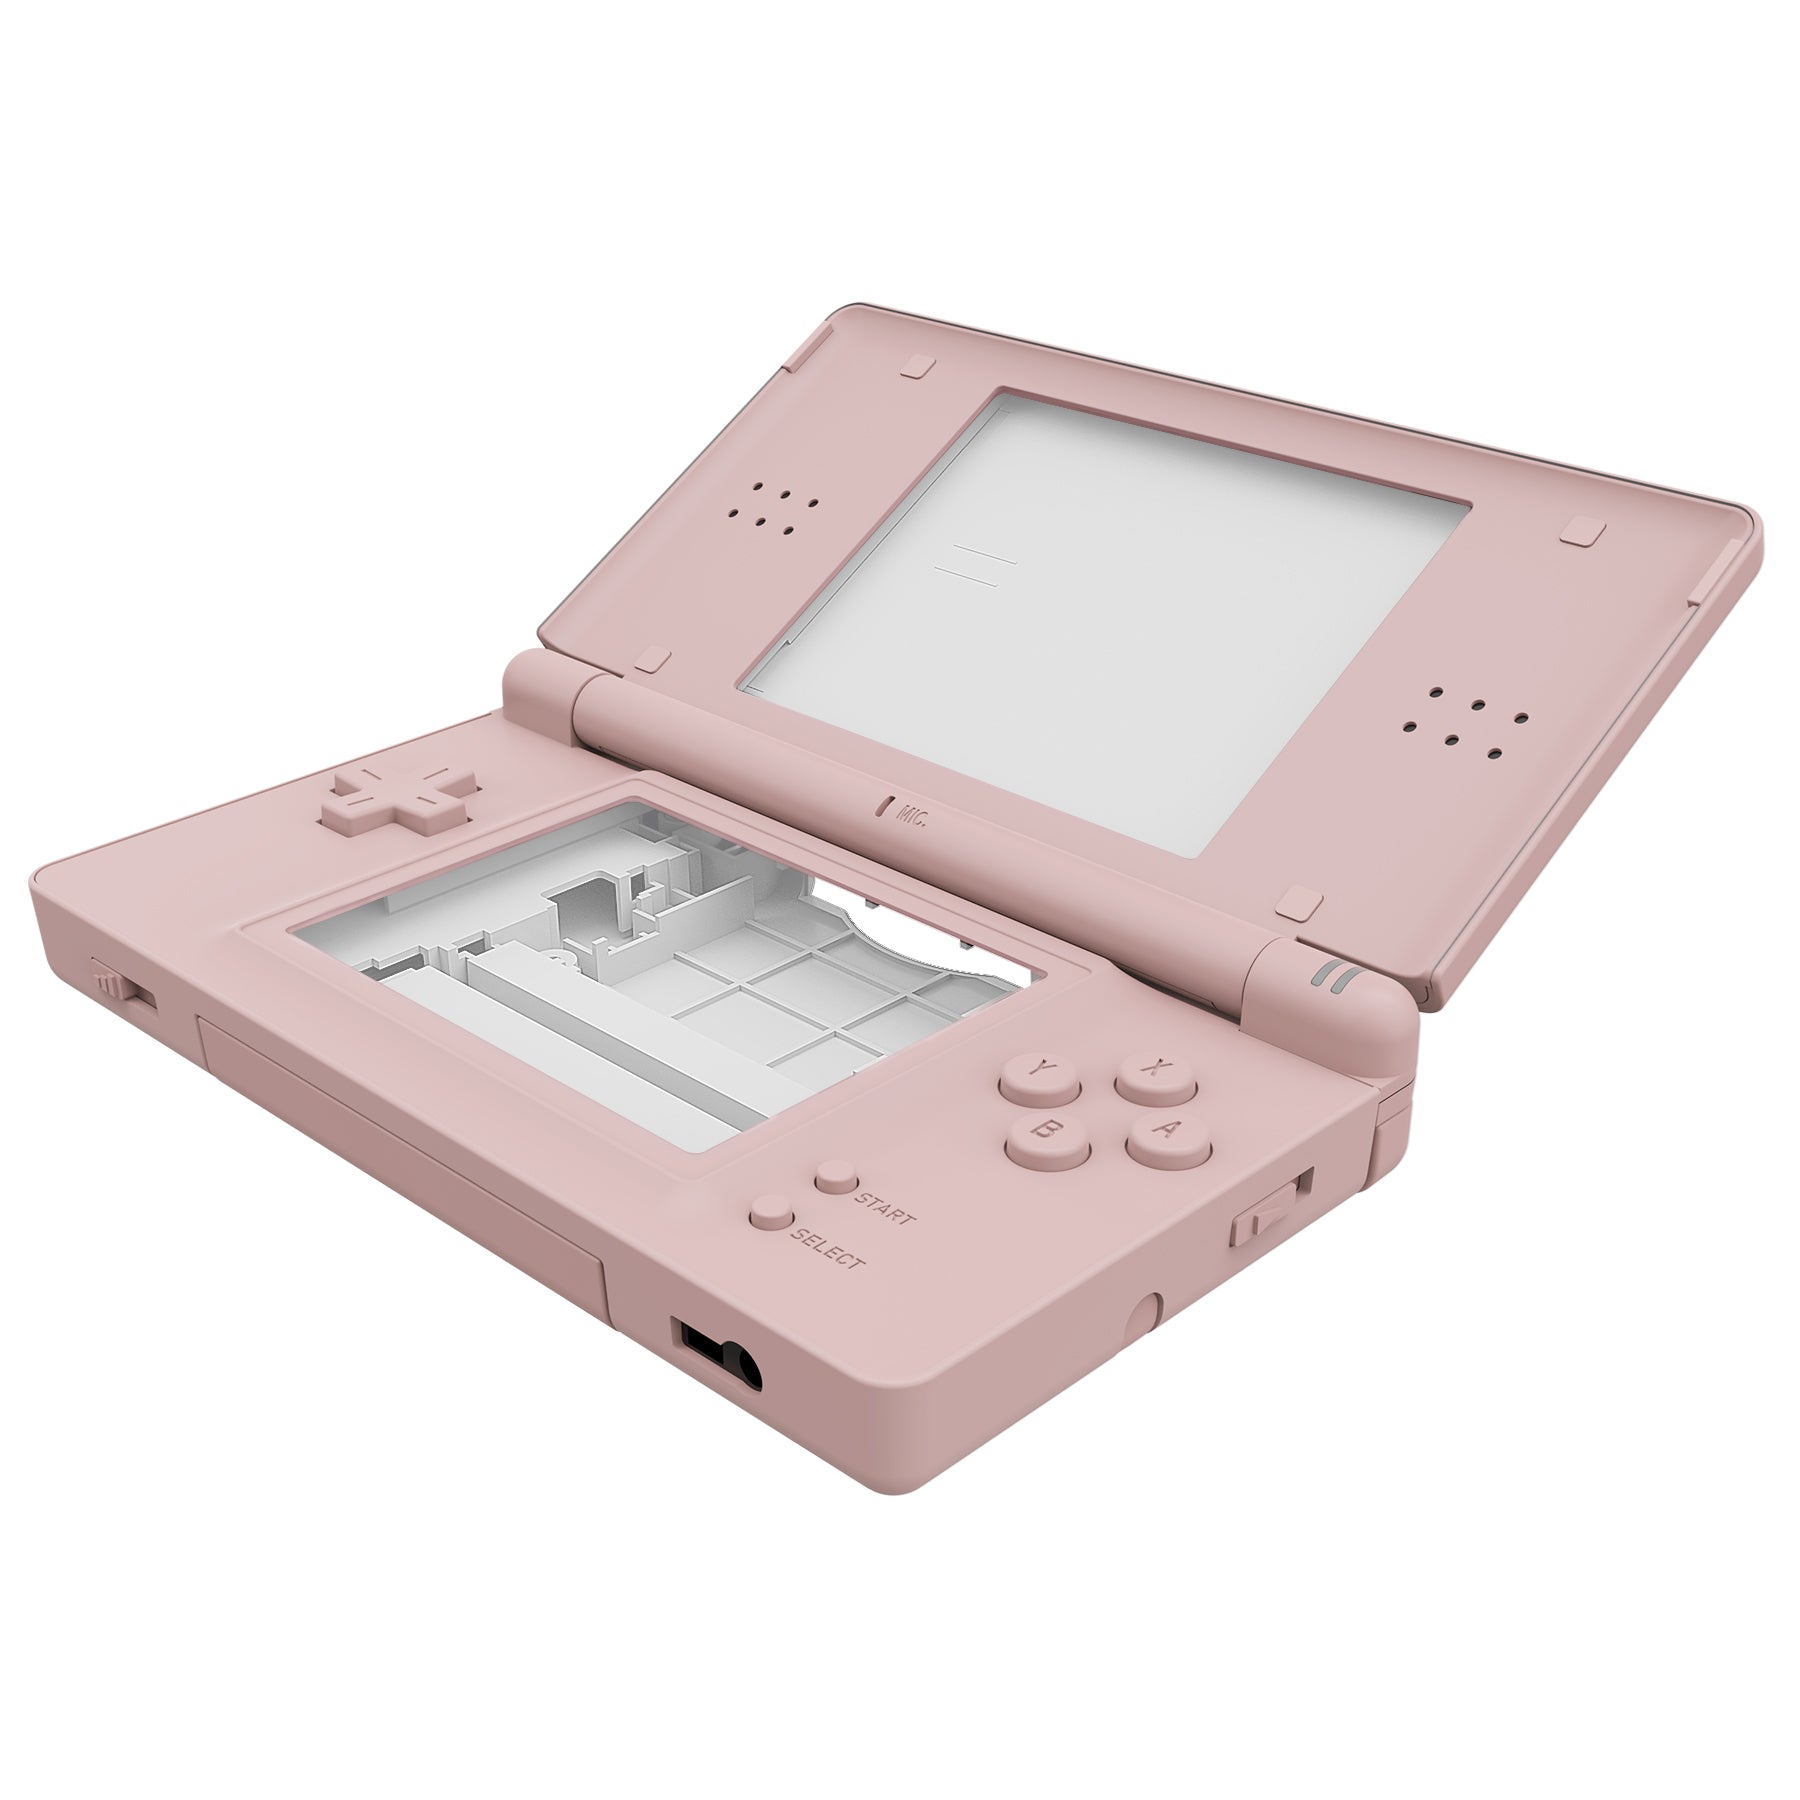 Nintendo DS lite ピンク - Nintendo Switch